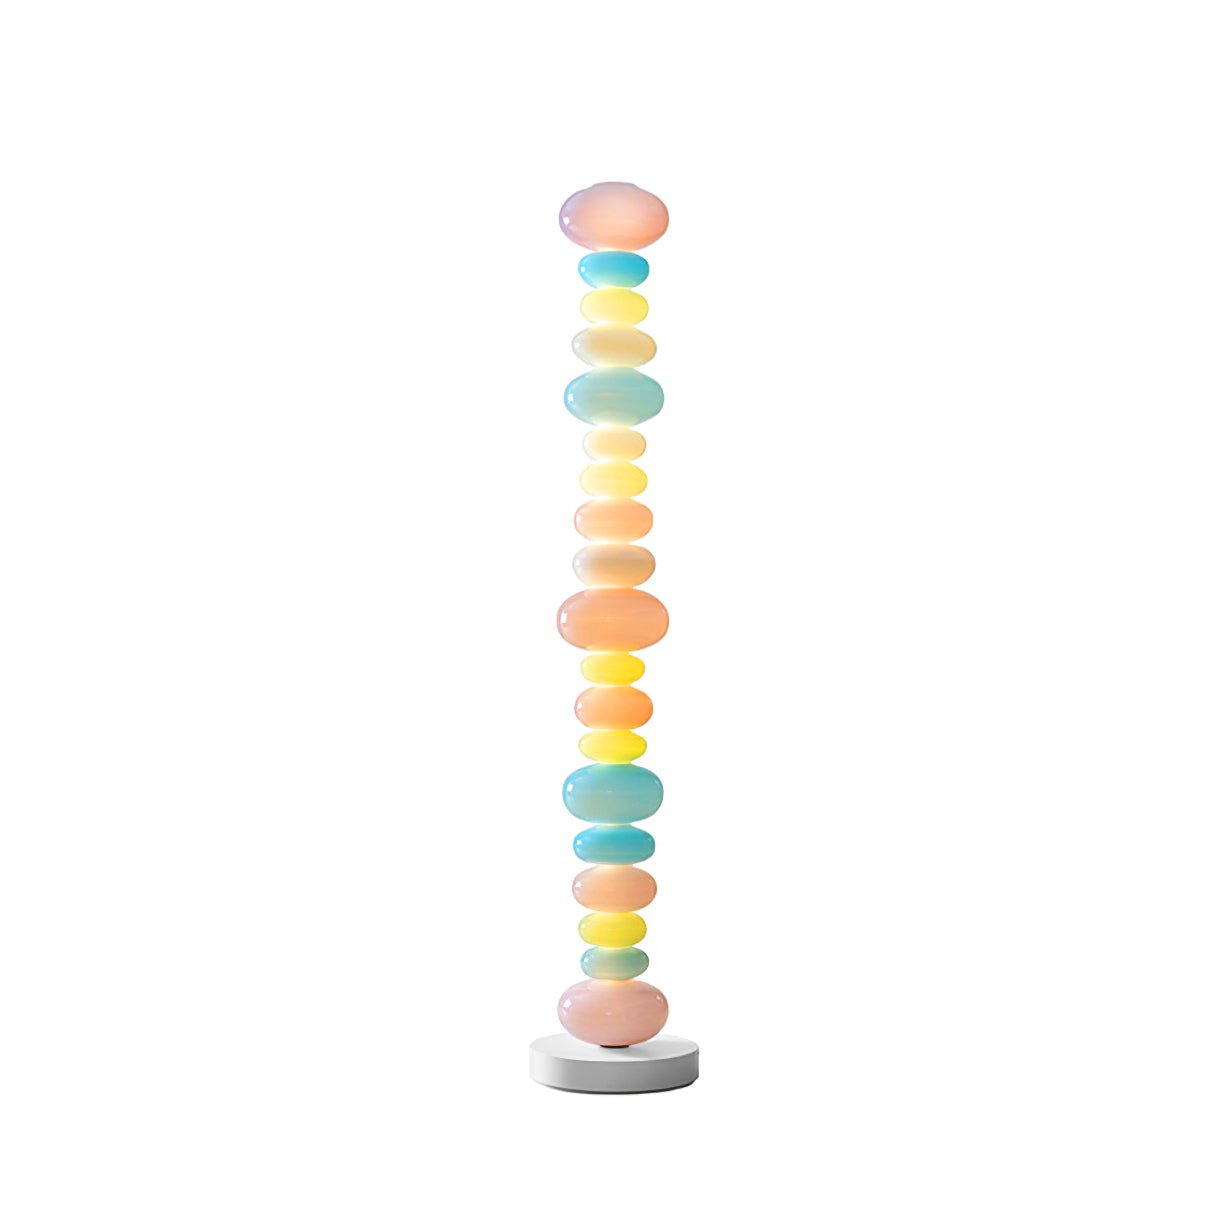 Candy Floor Lamp Model A with Multicolor EU Plug, Dimensions: Diameter 11.8″ x Height 61″ (30cm x 155cm)